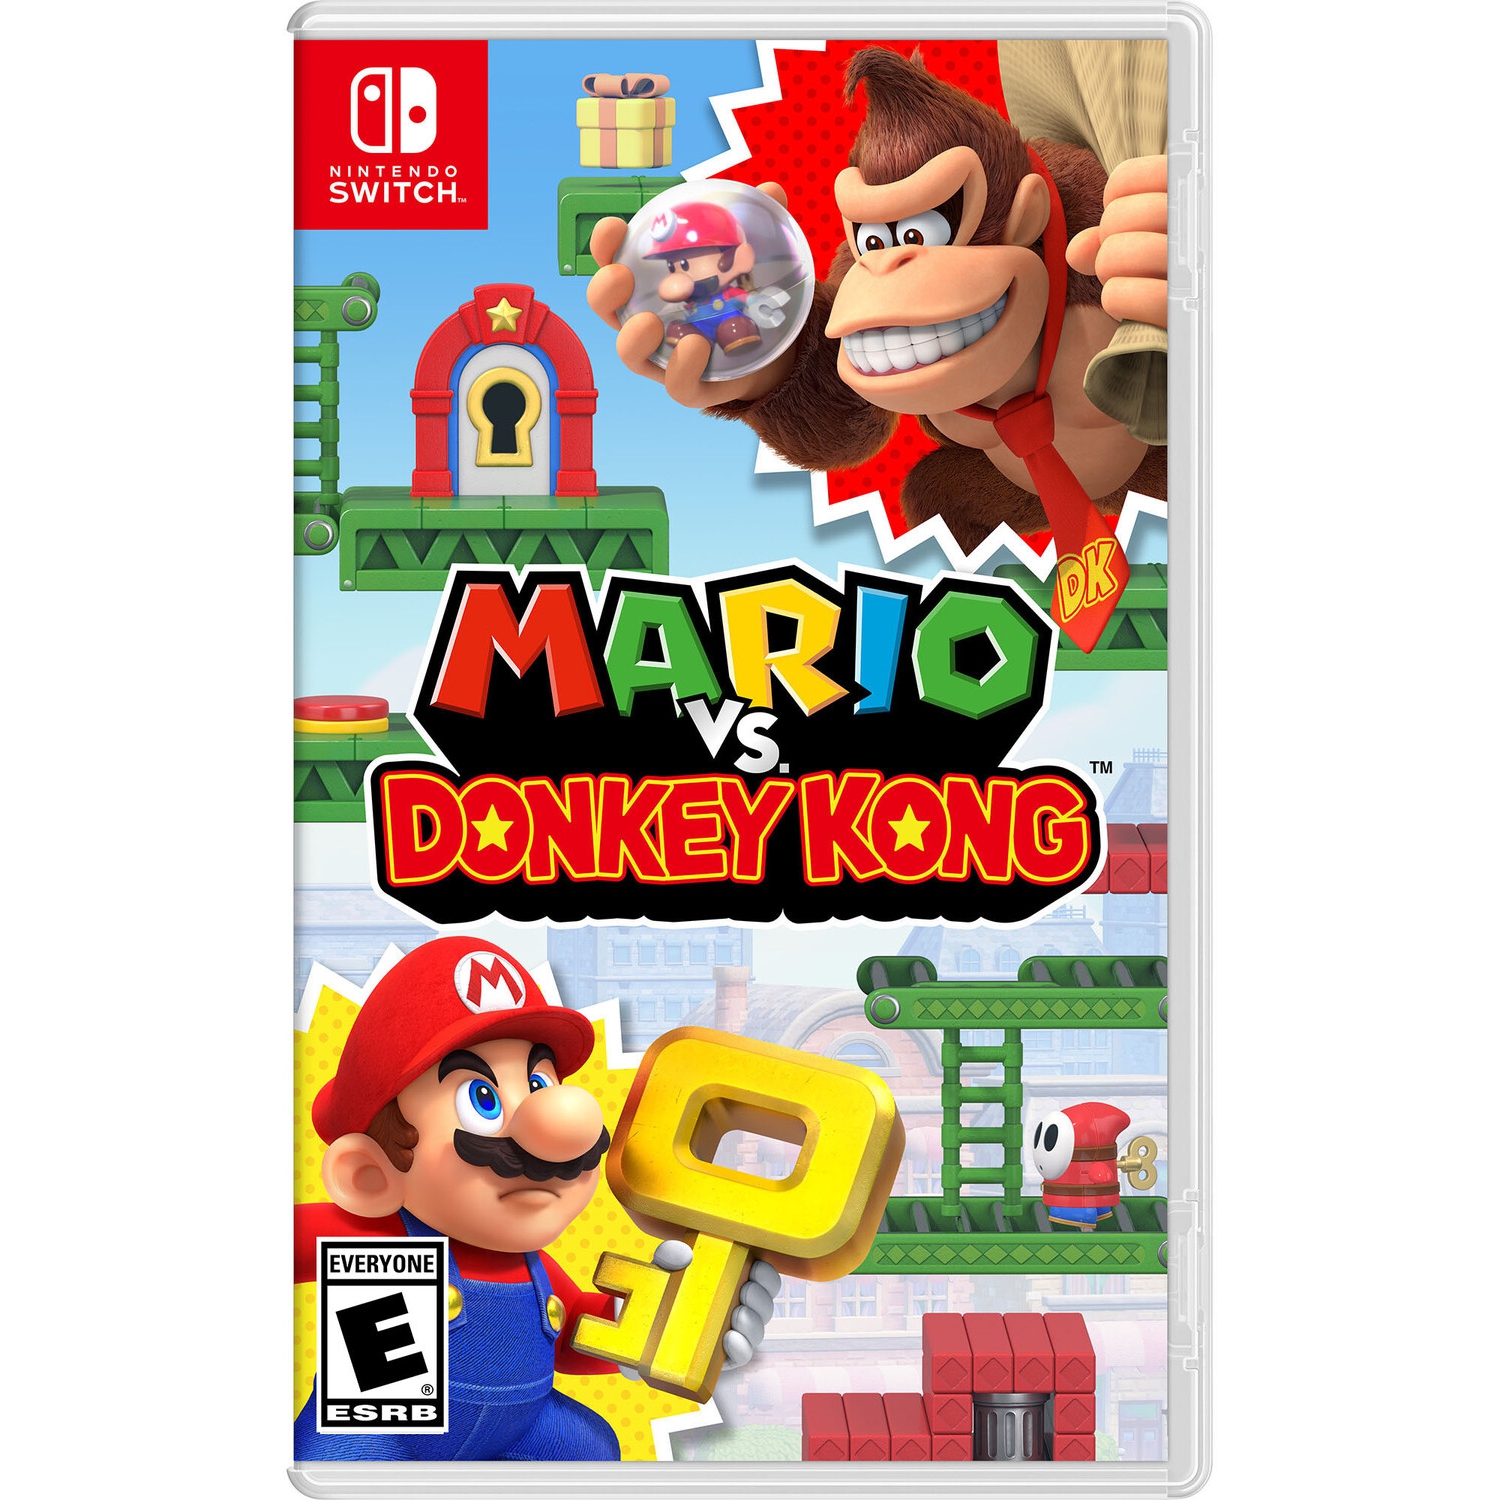 Mario VS Donkey Kong for Nintendo Switch [VIDEOGAMES]